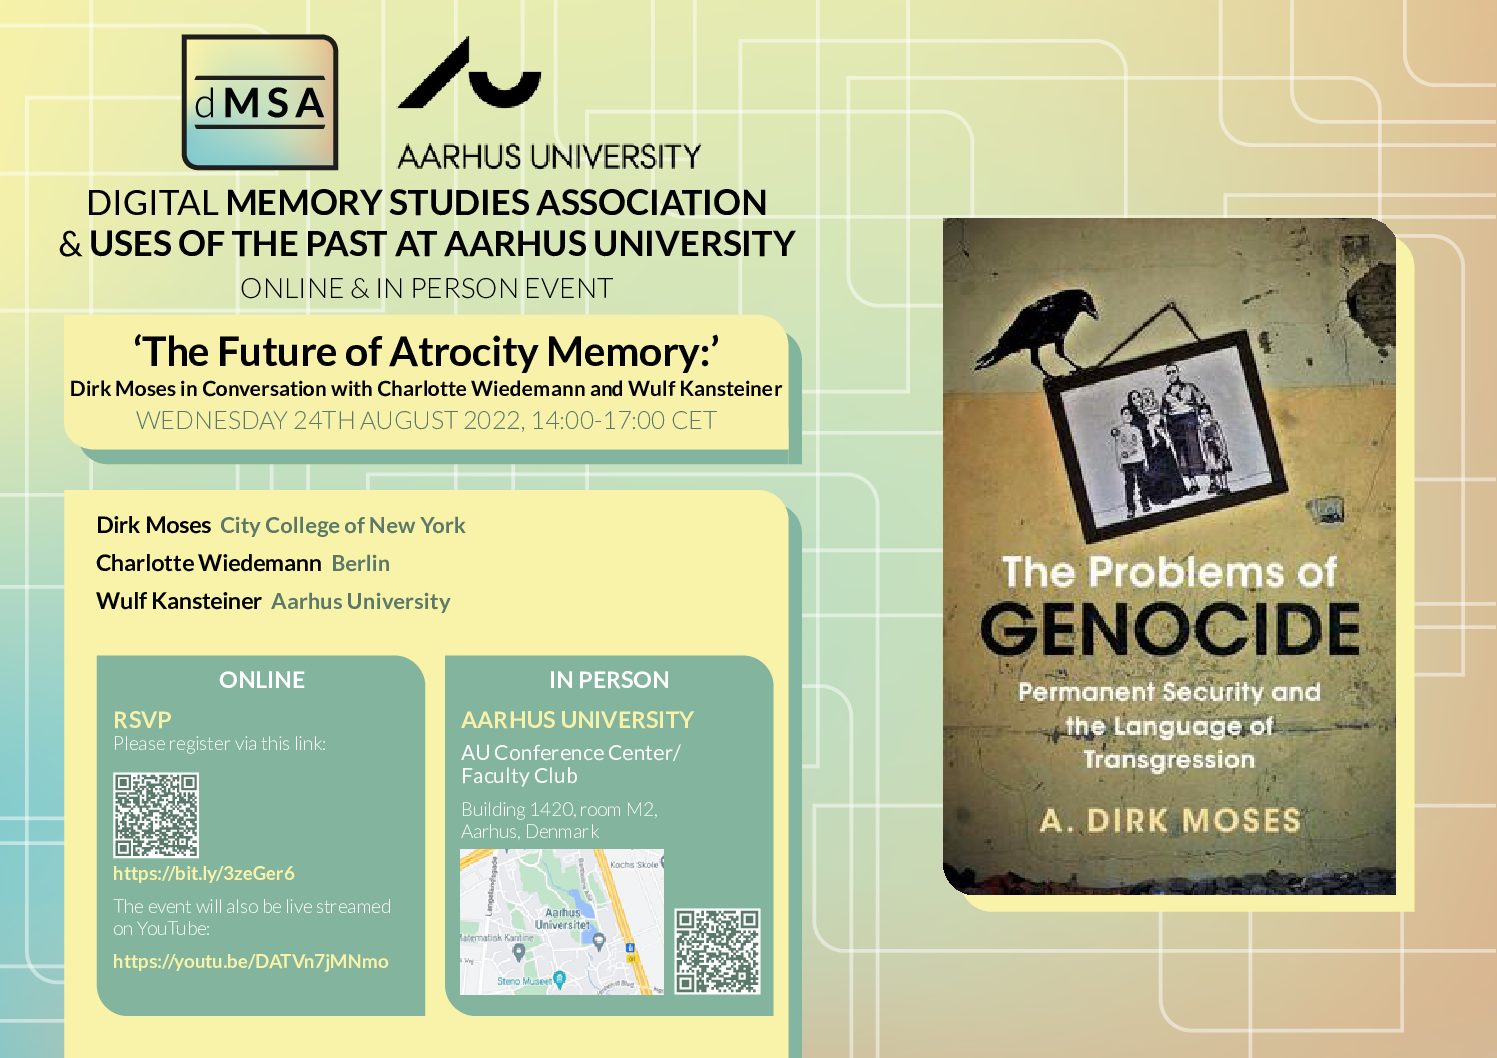 The Future of Atrocity Memory